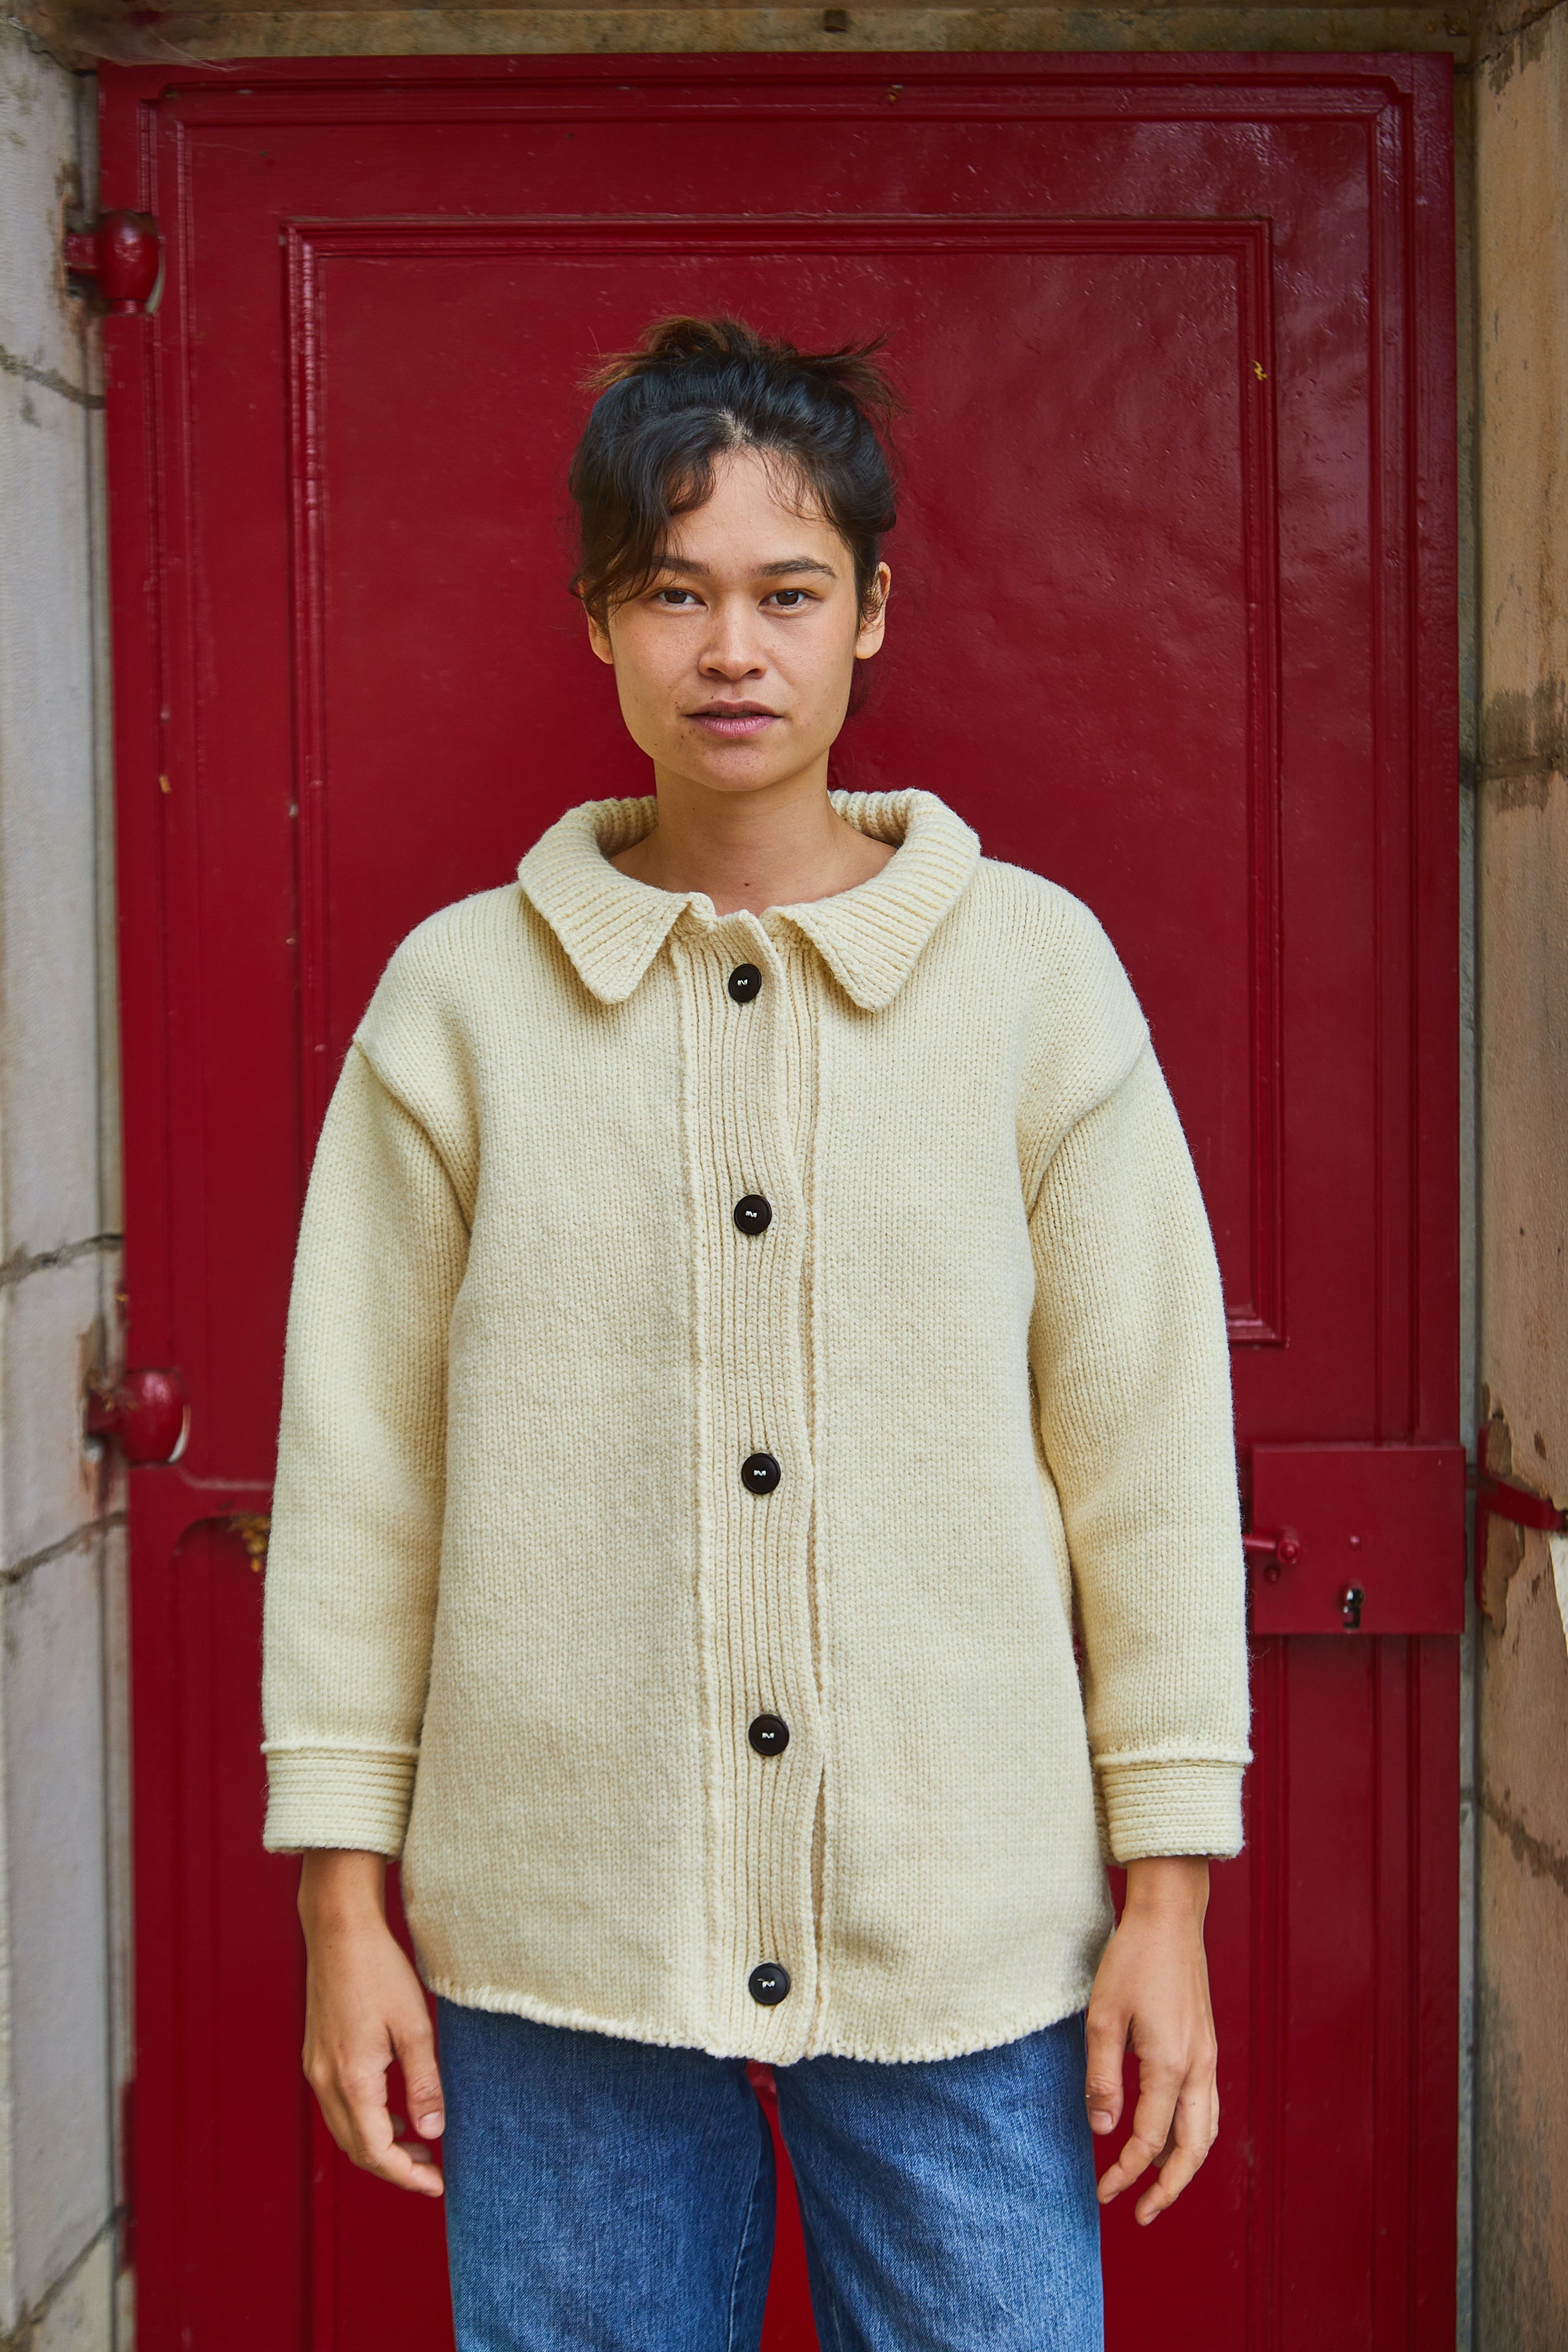 CALAMITY Wool Jacket - 100% Cruelty Free Merino Wool in off-white - Spanish Merino Wool jacket - L'Envers